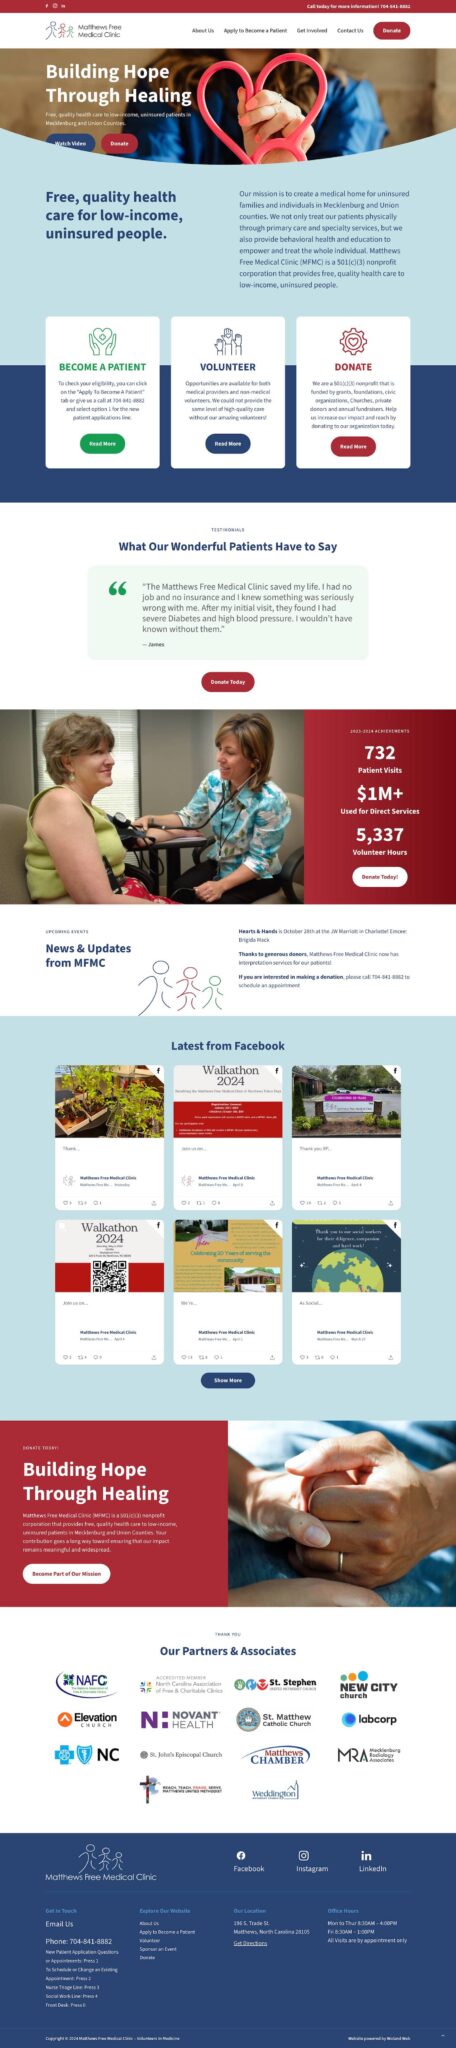 Matthews Free Clinic website screenshot showing home page